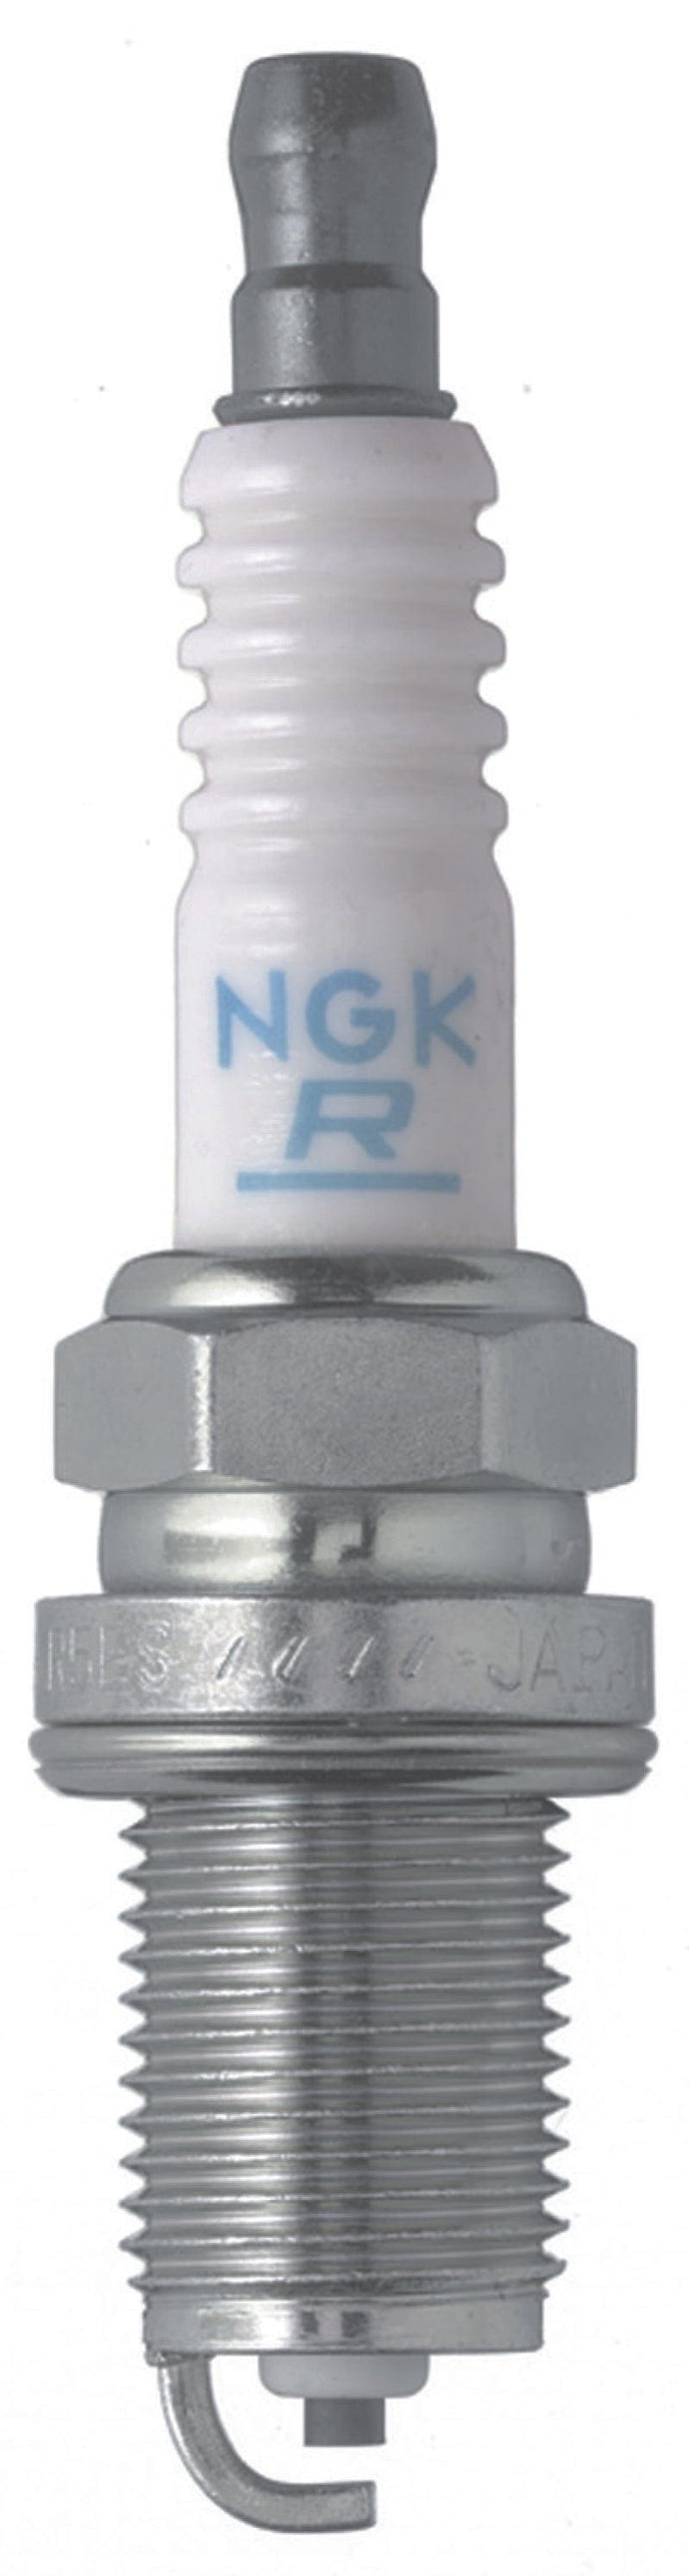 NGK NGK3735